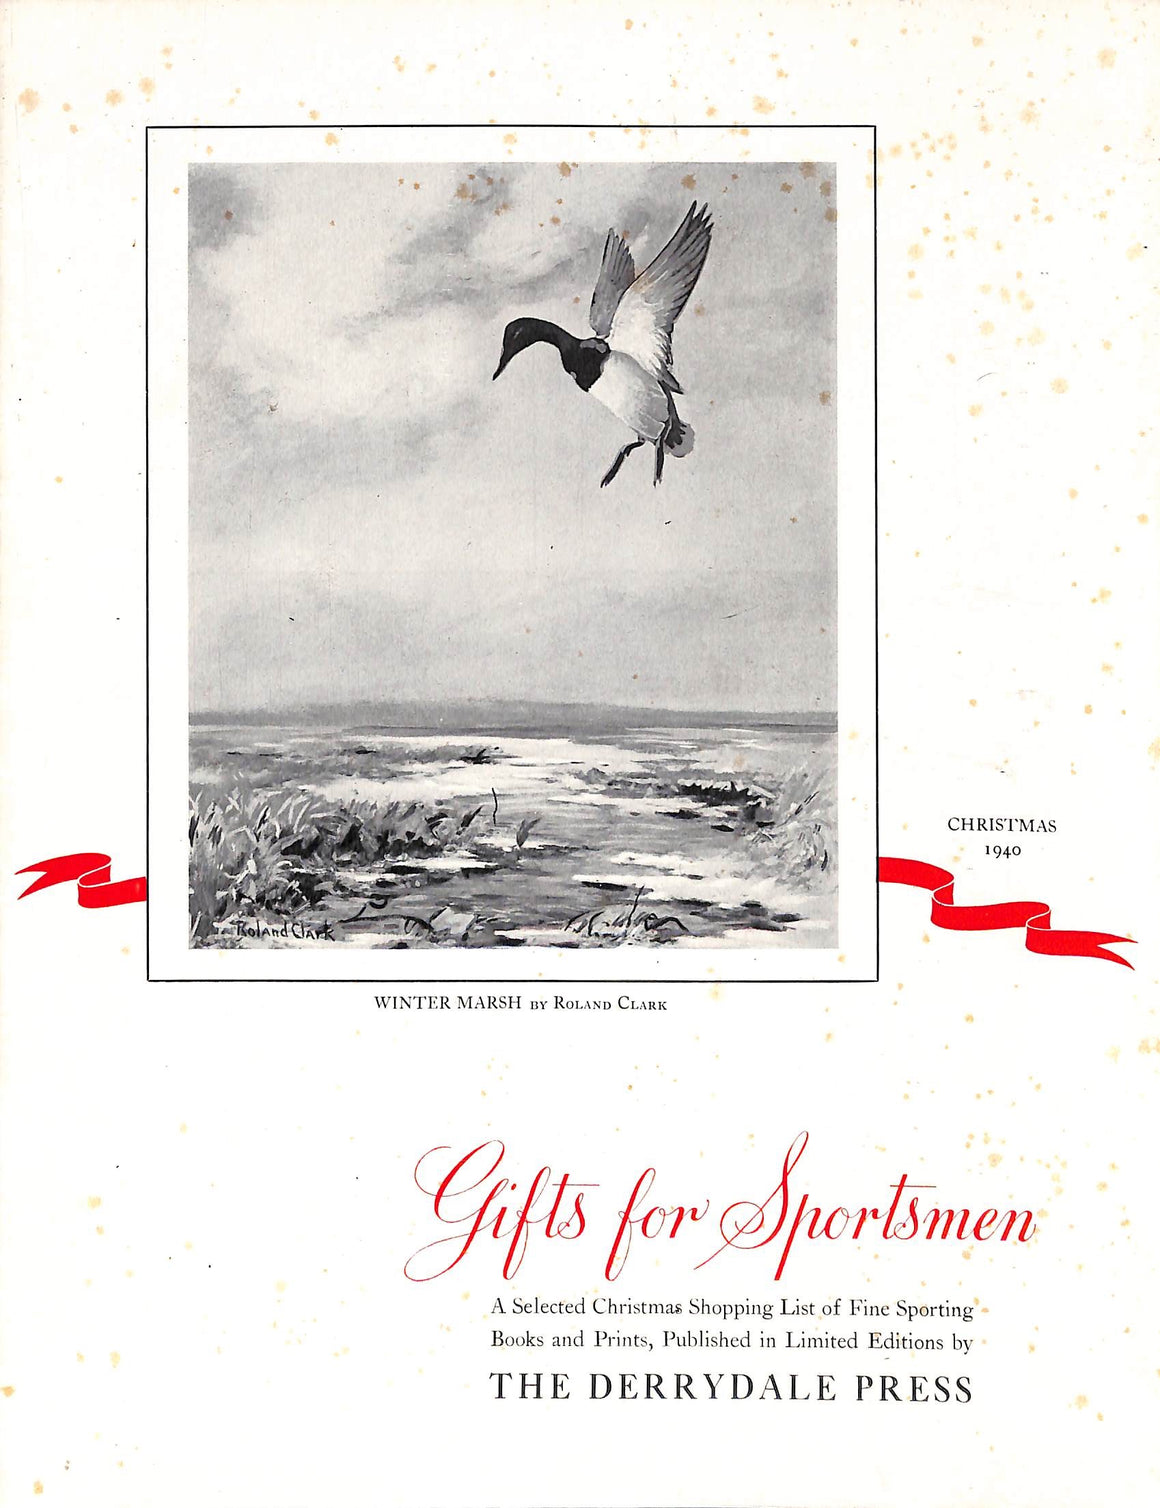 "Gifts for Sportsmen: Christmas 1940"